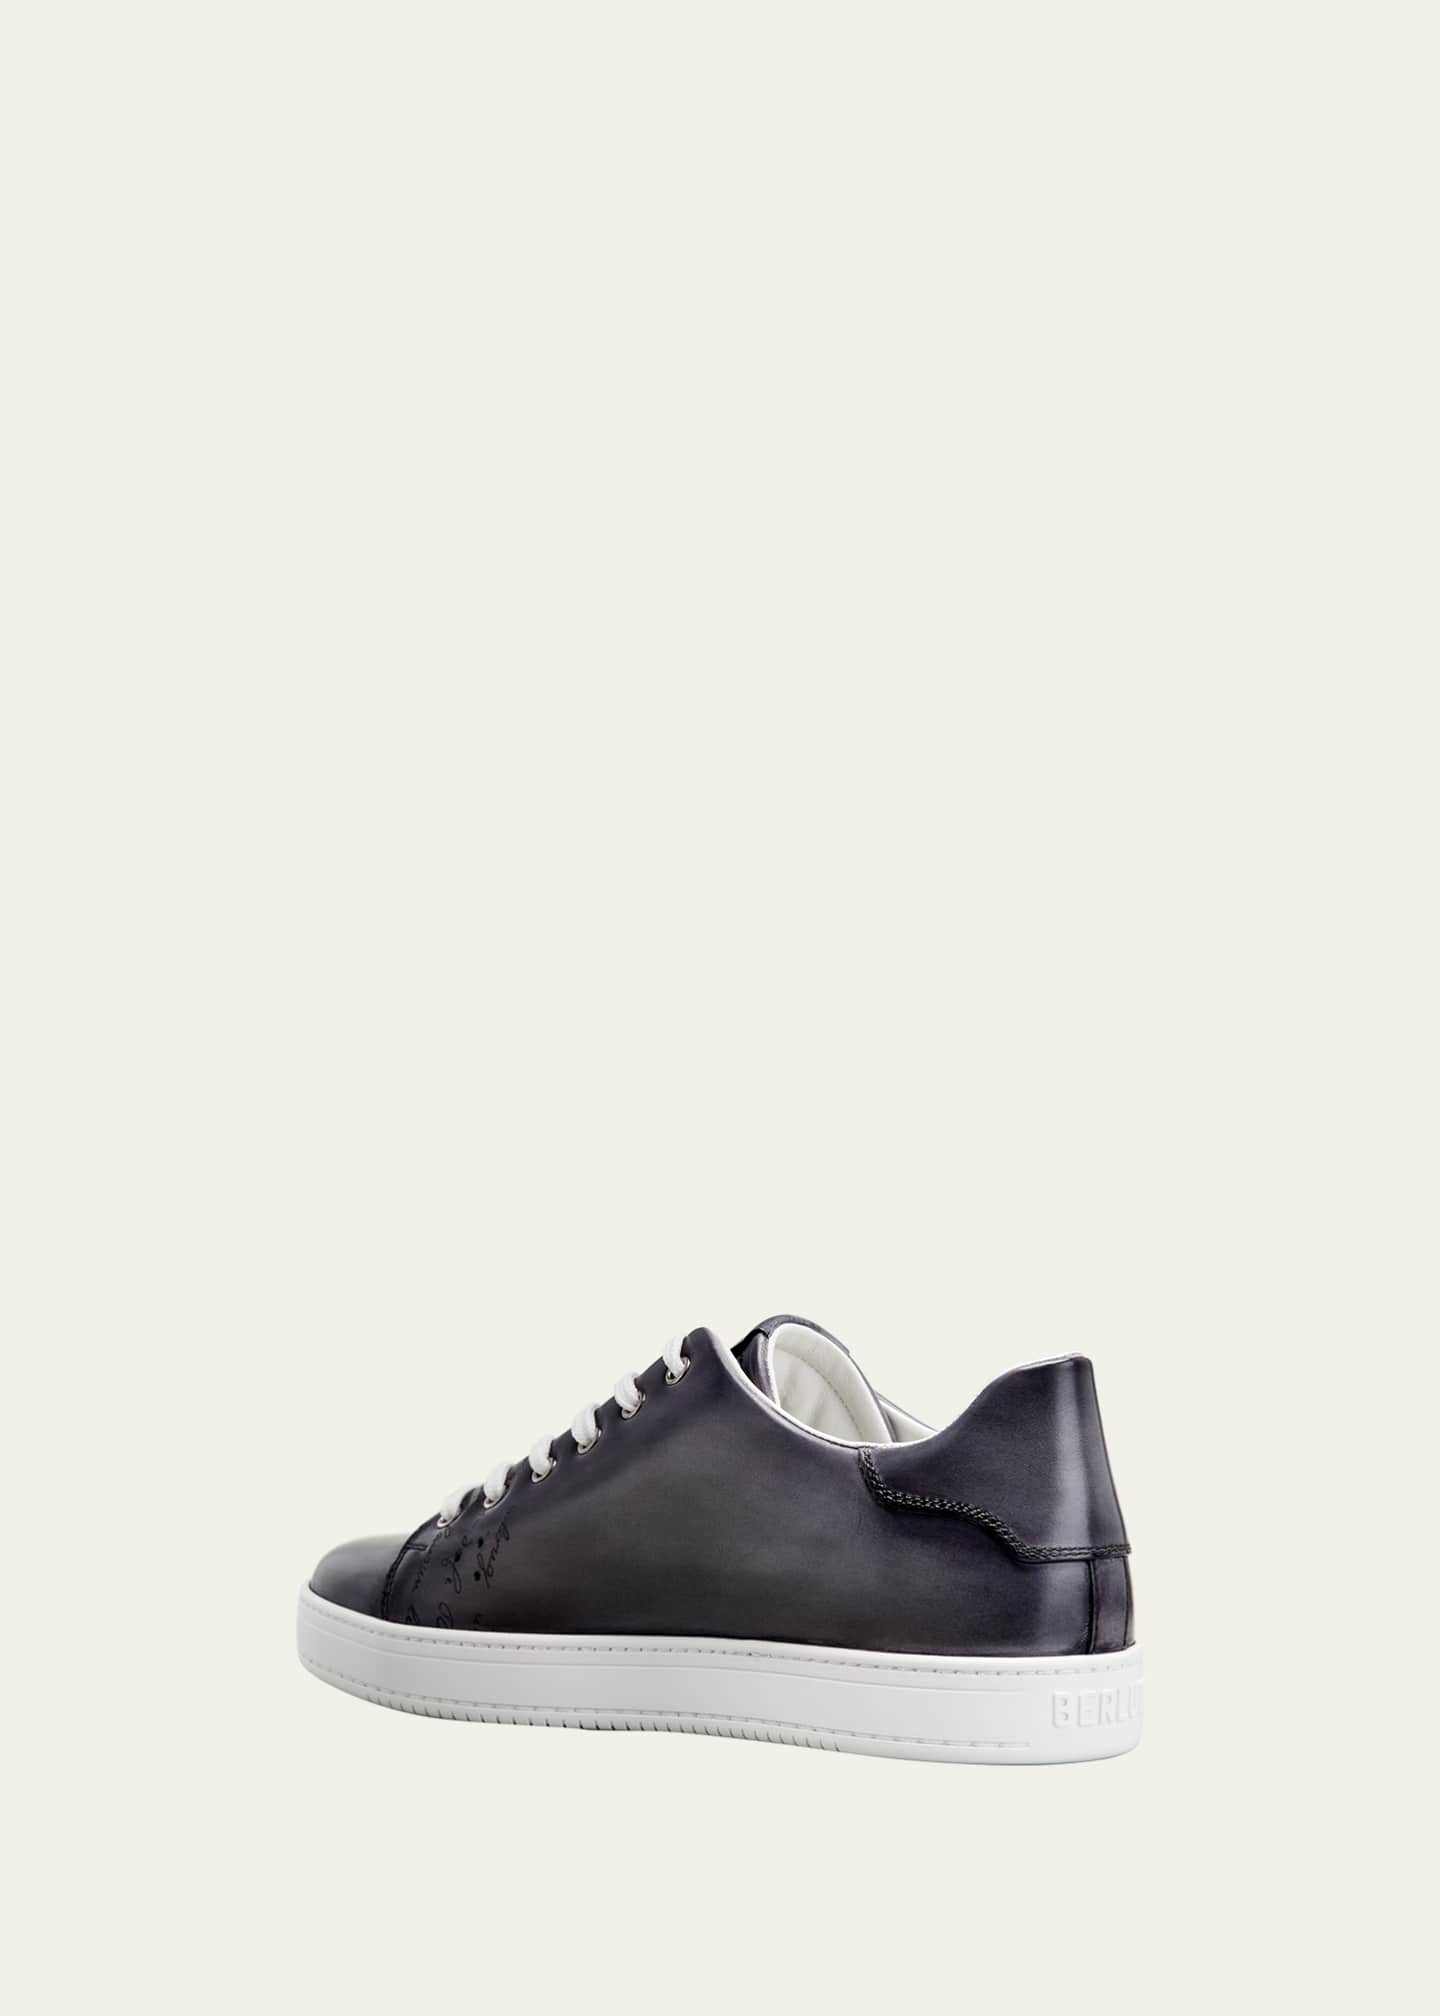 Berluti Men's Playtime Scritto Leather Sneakers - Bergdorf Goodman